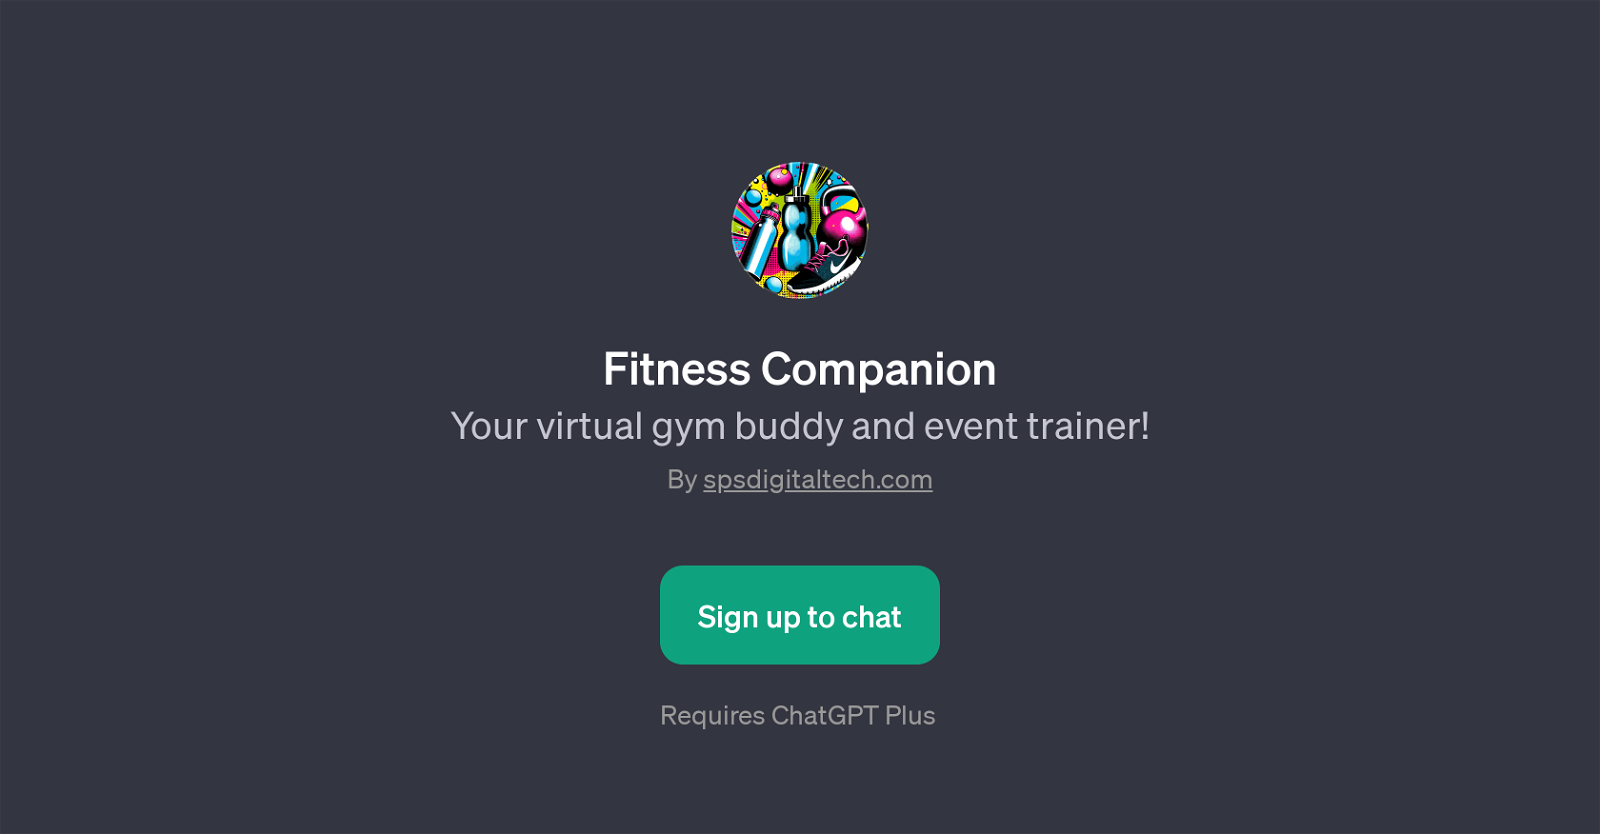 Fitness Companion website